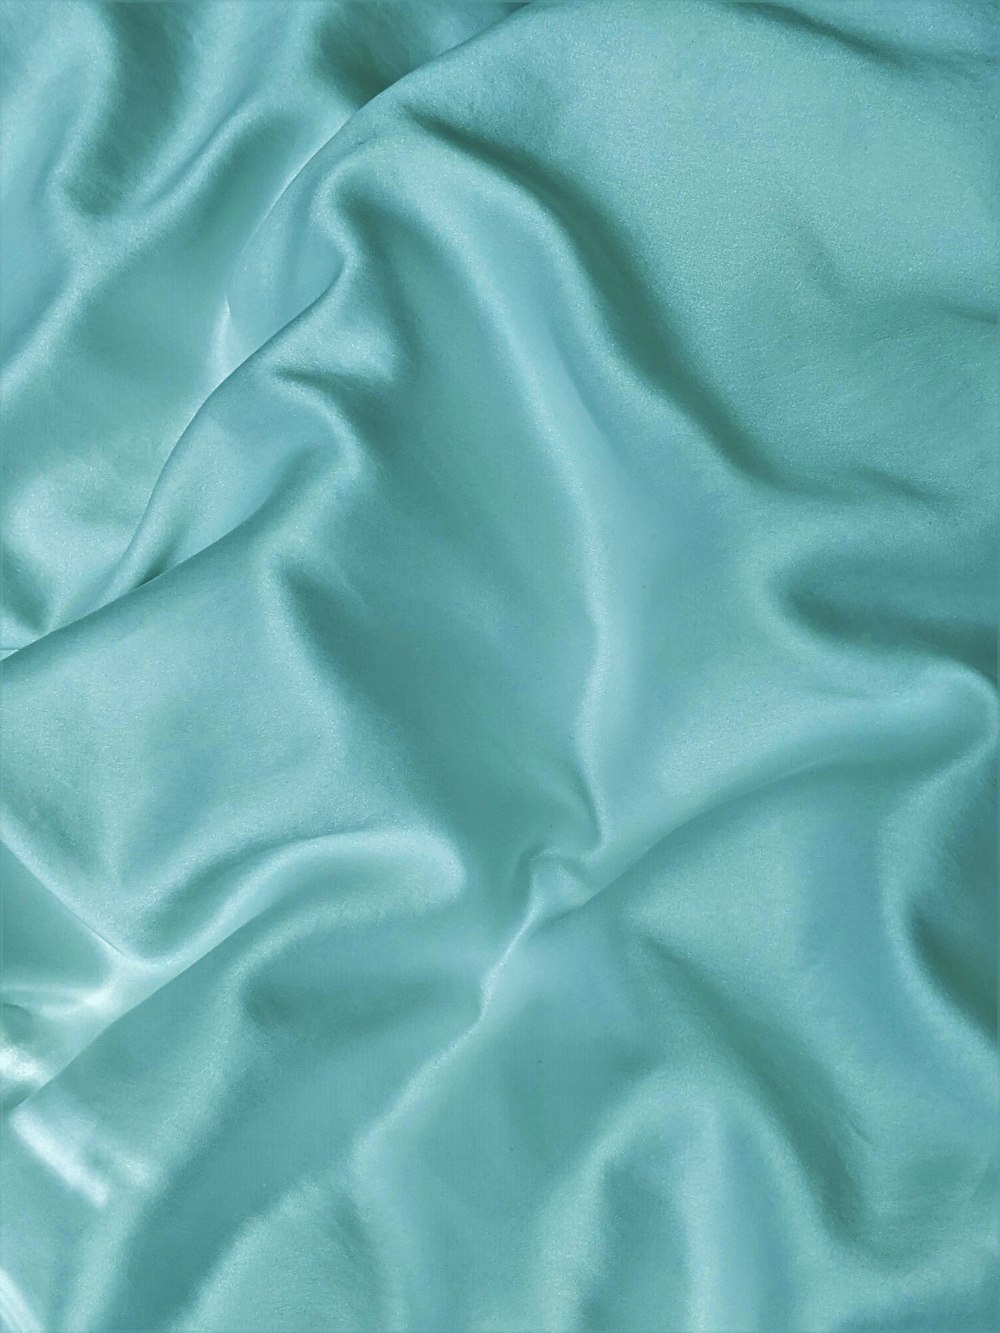 a close up view of a blue sheet